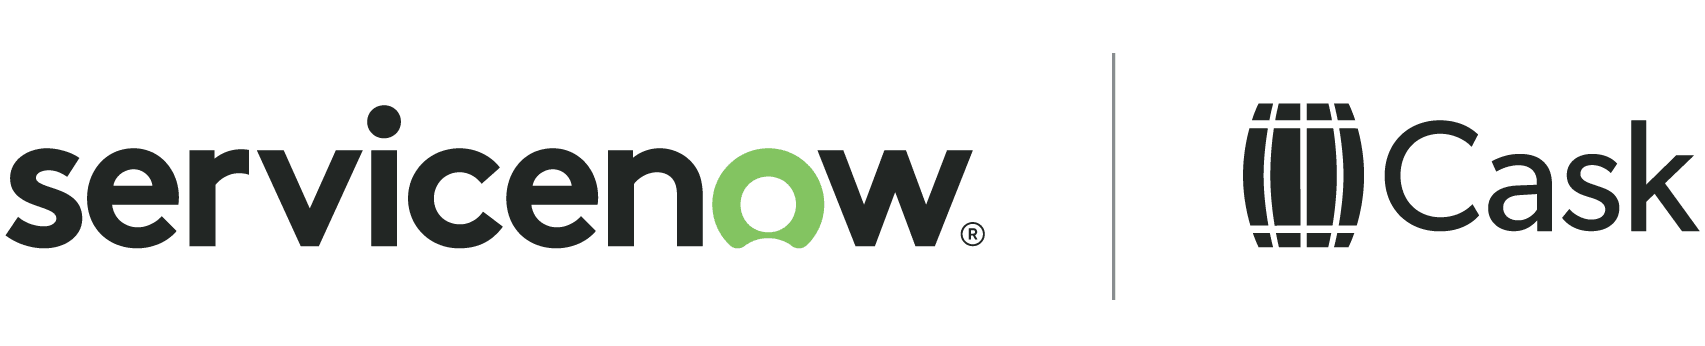 ServiceNow Cask logo